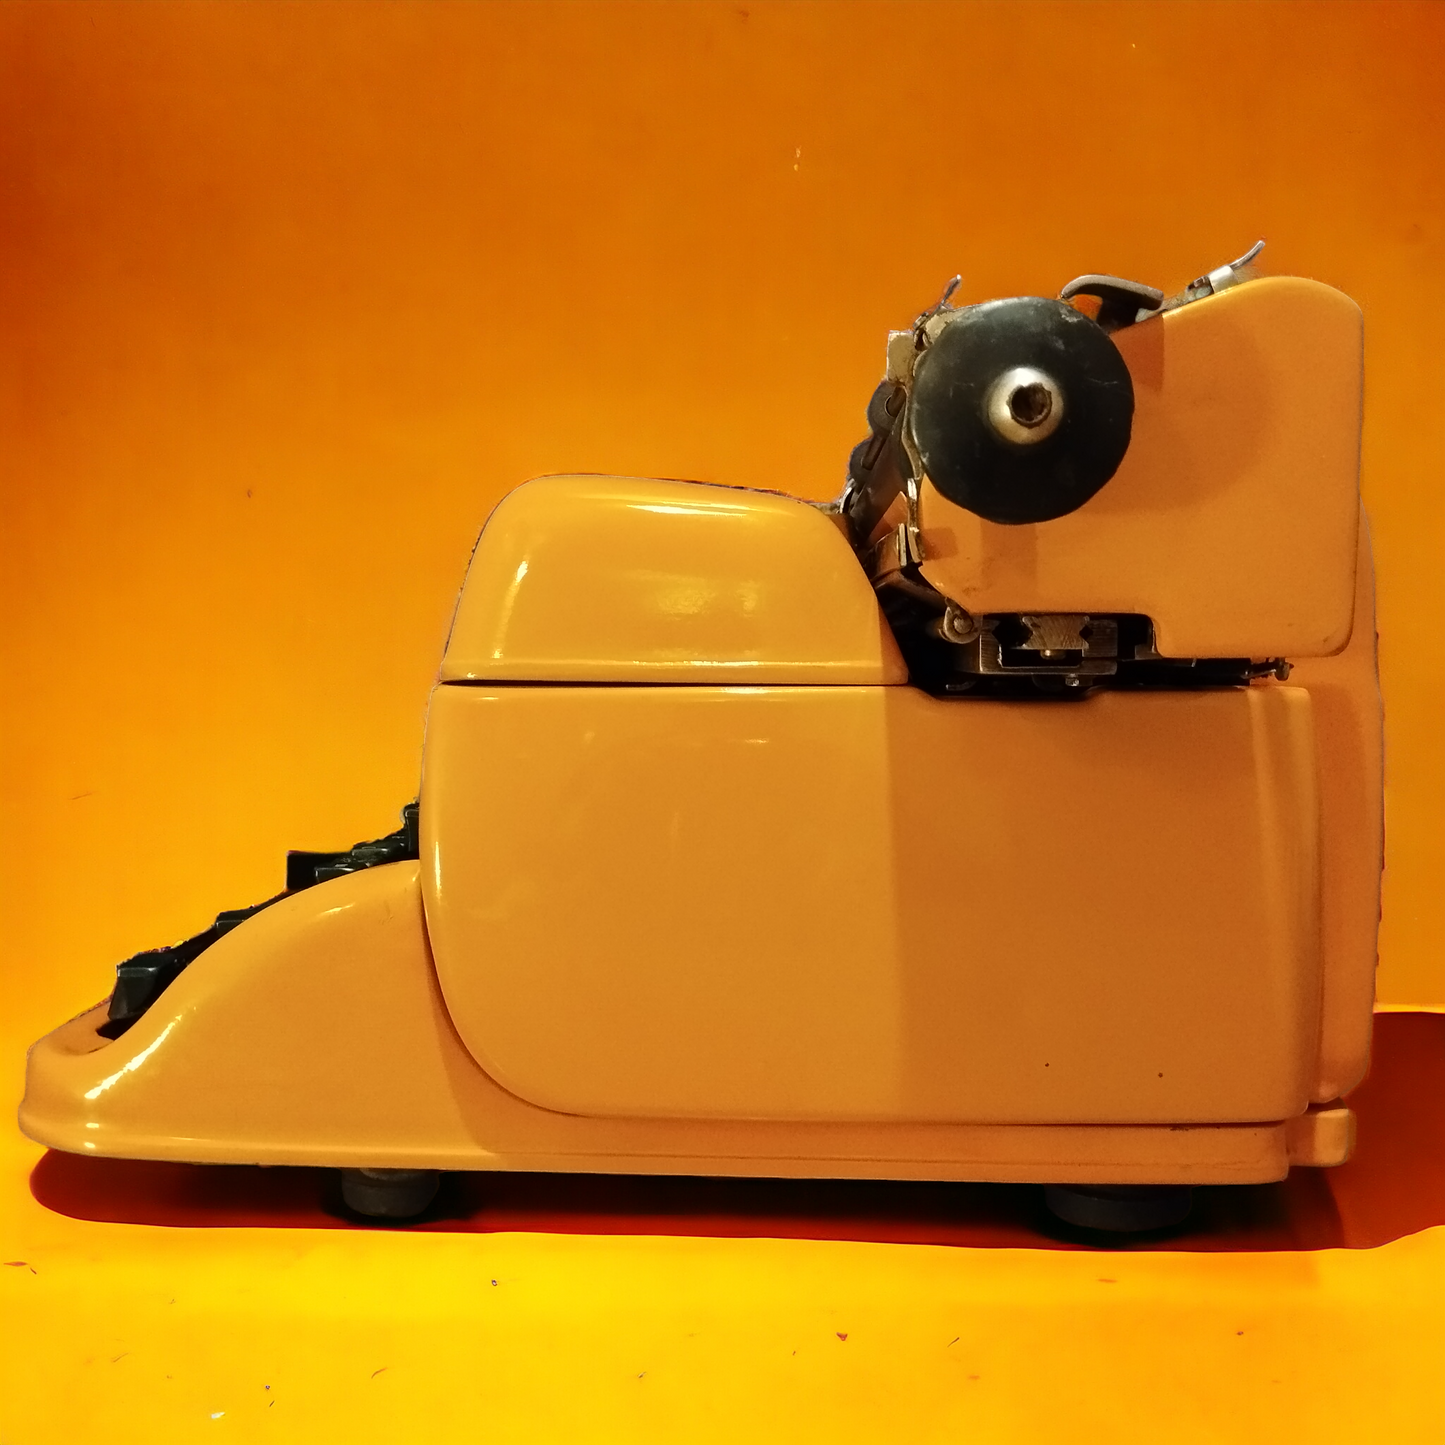 Image of Remington Desktop Typewriter. Available from universaltypewritercompany.in